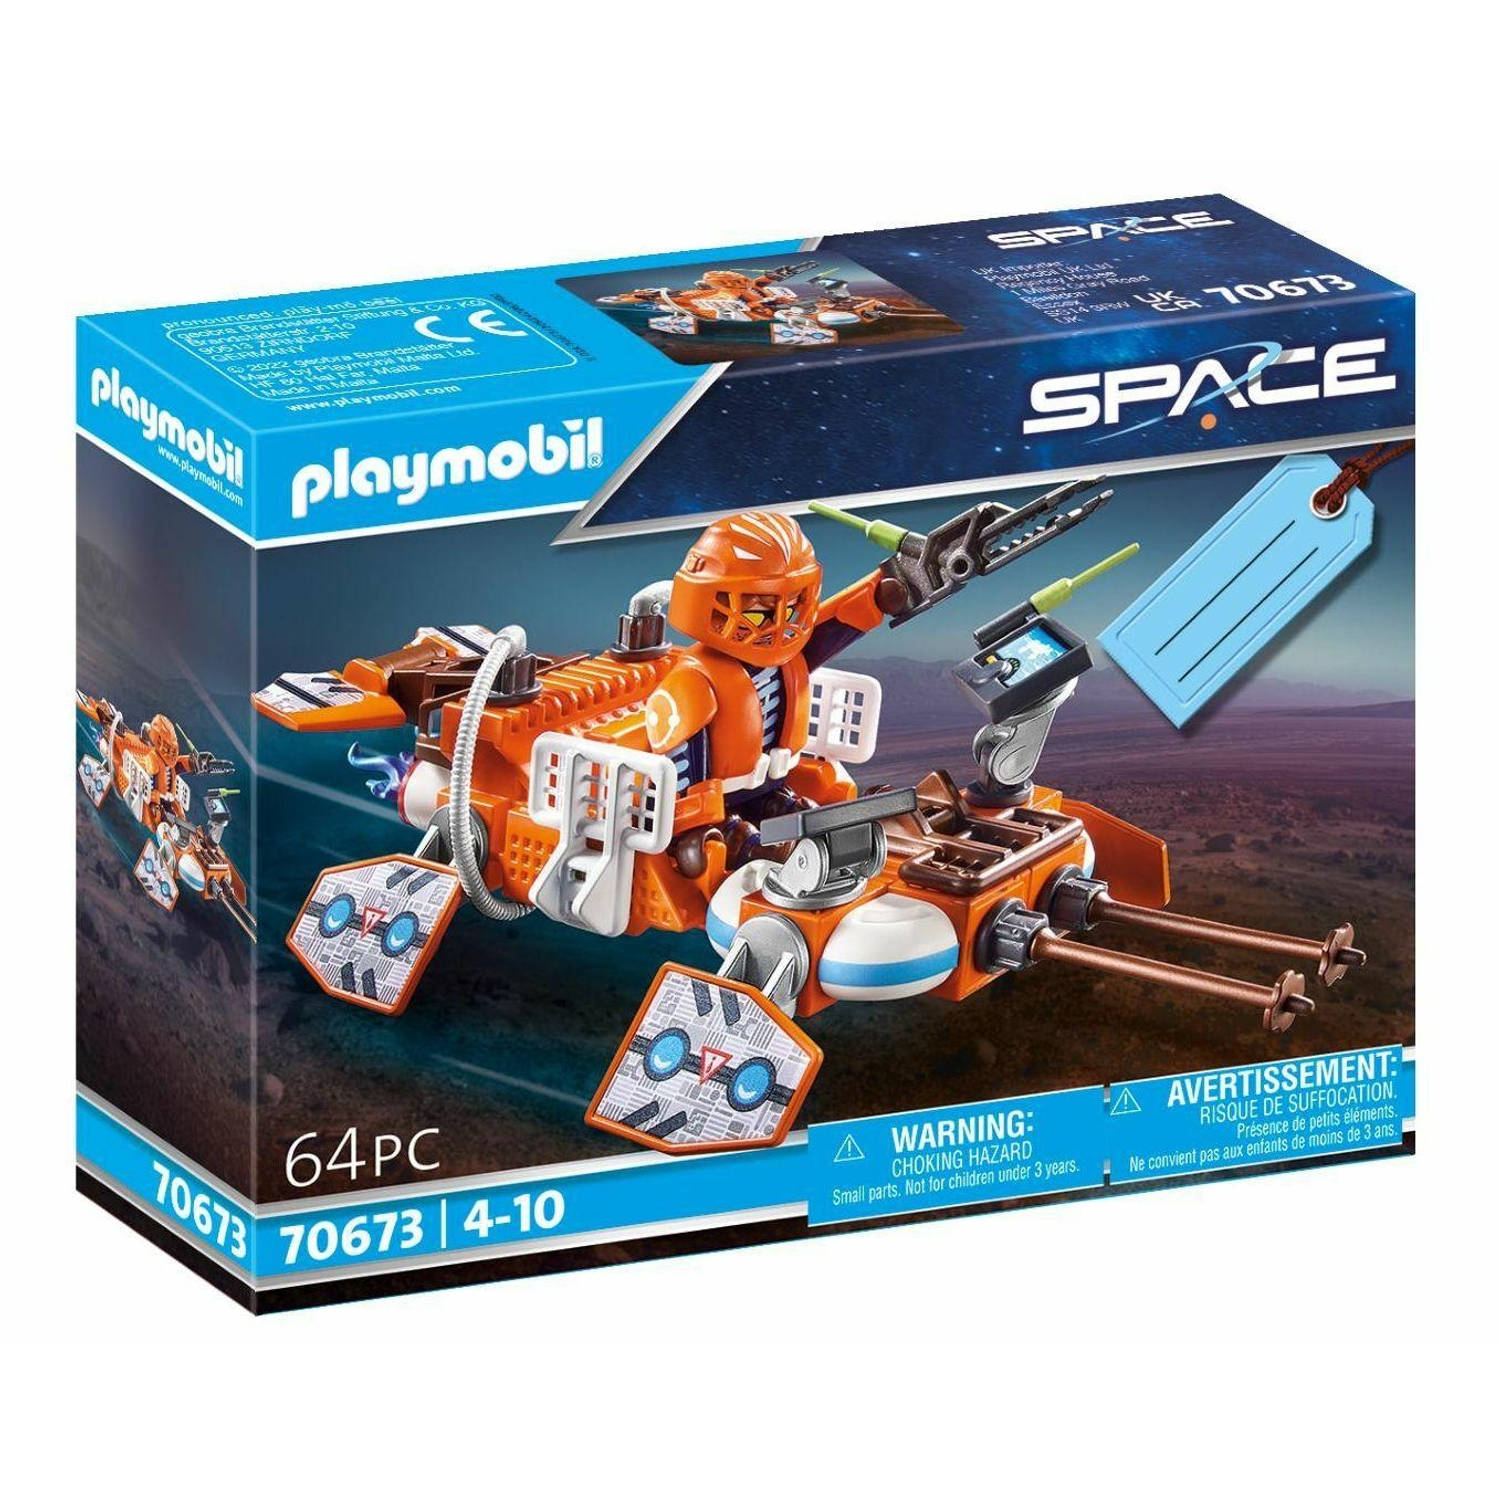 Playmobil 70673 gift set space speeder